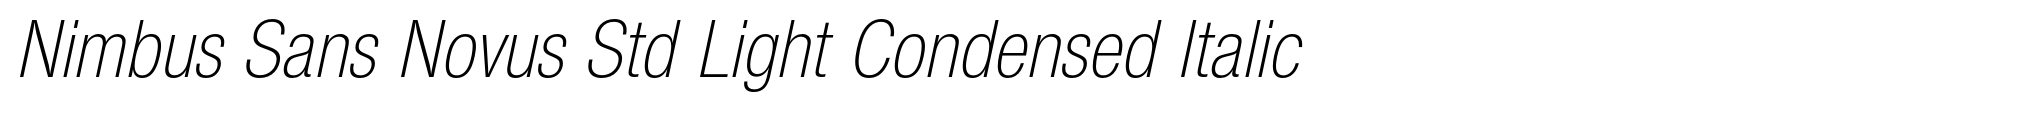 Nimbus Sans Novus Std Light Condensed Italic image